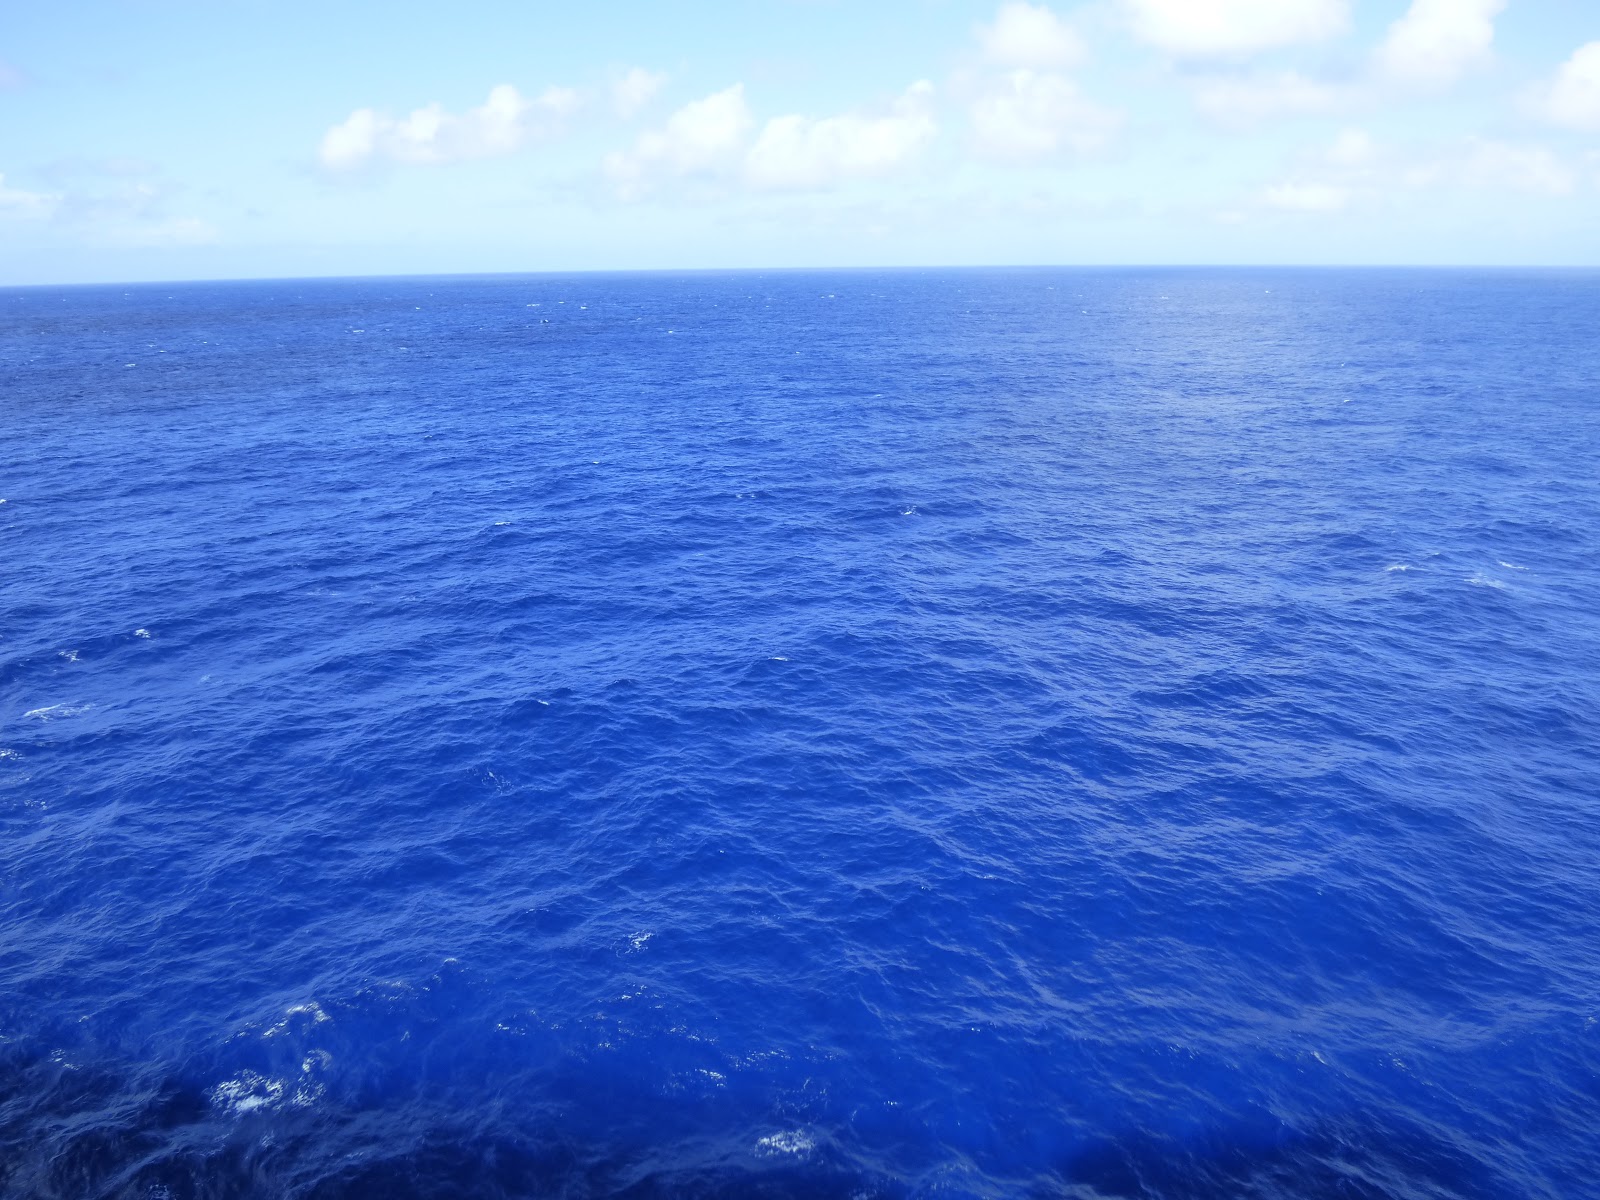 Тихий океан изучен. Бескрайнее синее море. Бескрайний океан. Синий океан. Атлантический океан.